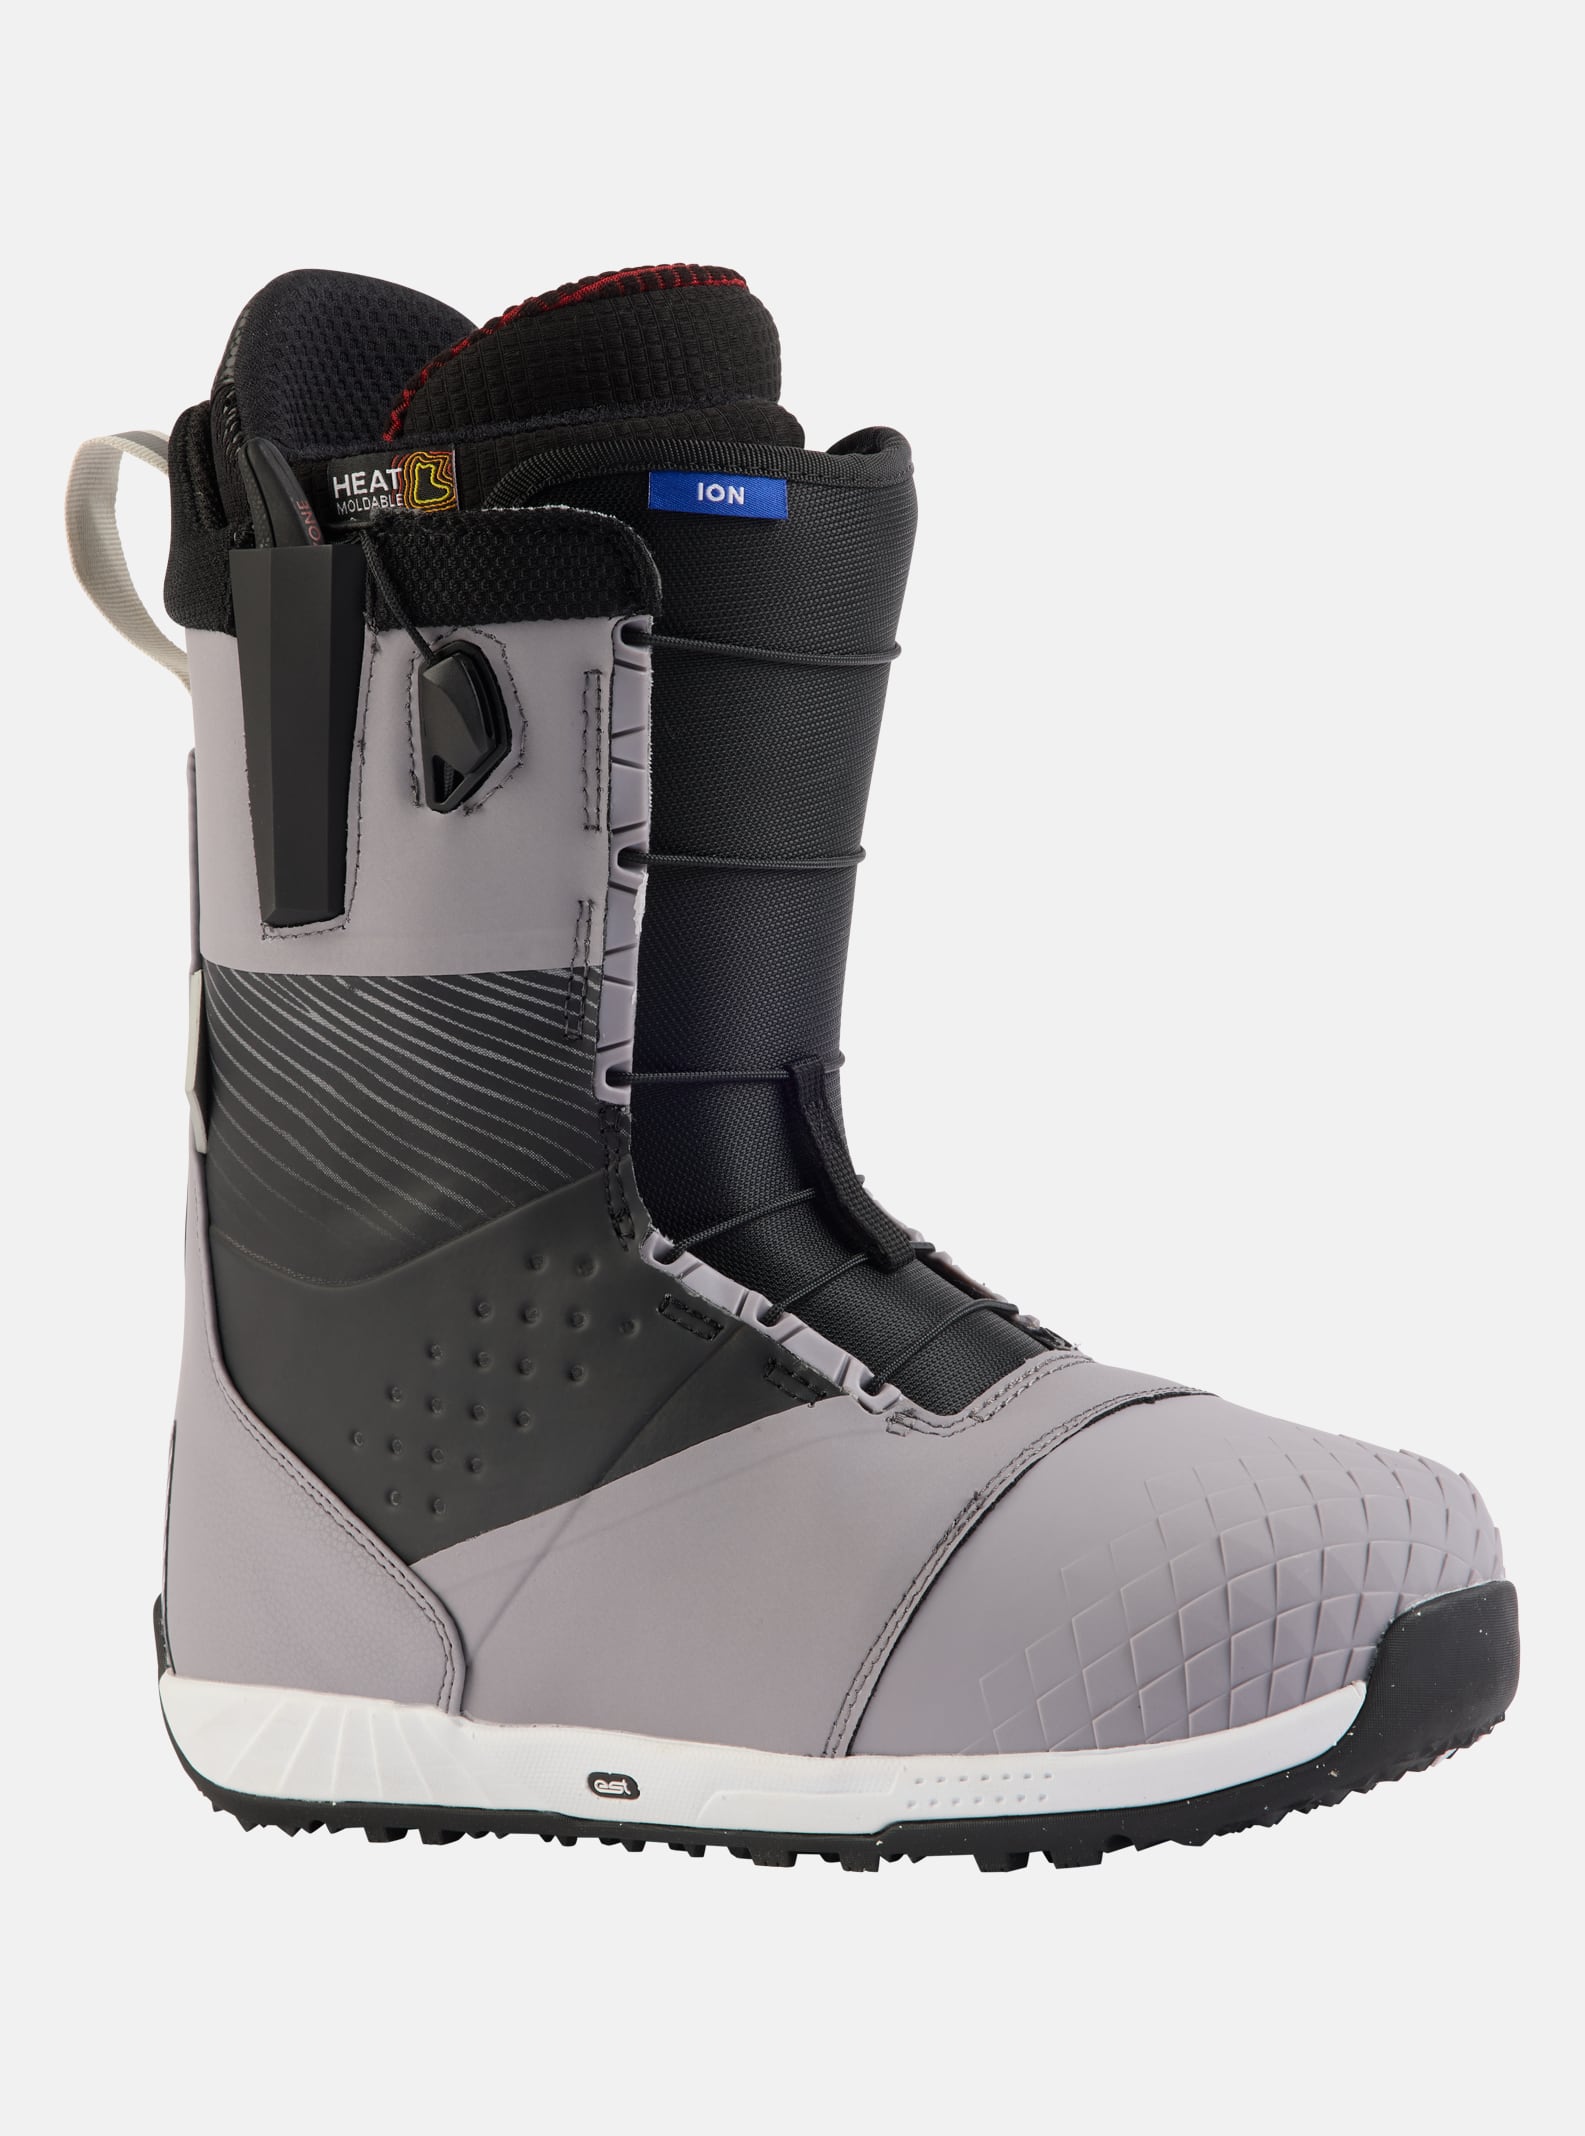 Felicidades Refrigerar Ingenieros Men's Ion Snowboard Boots | Burton.com Winter 2023 US